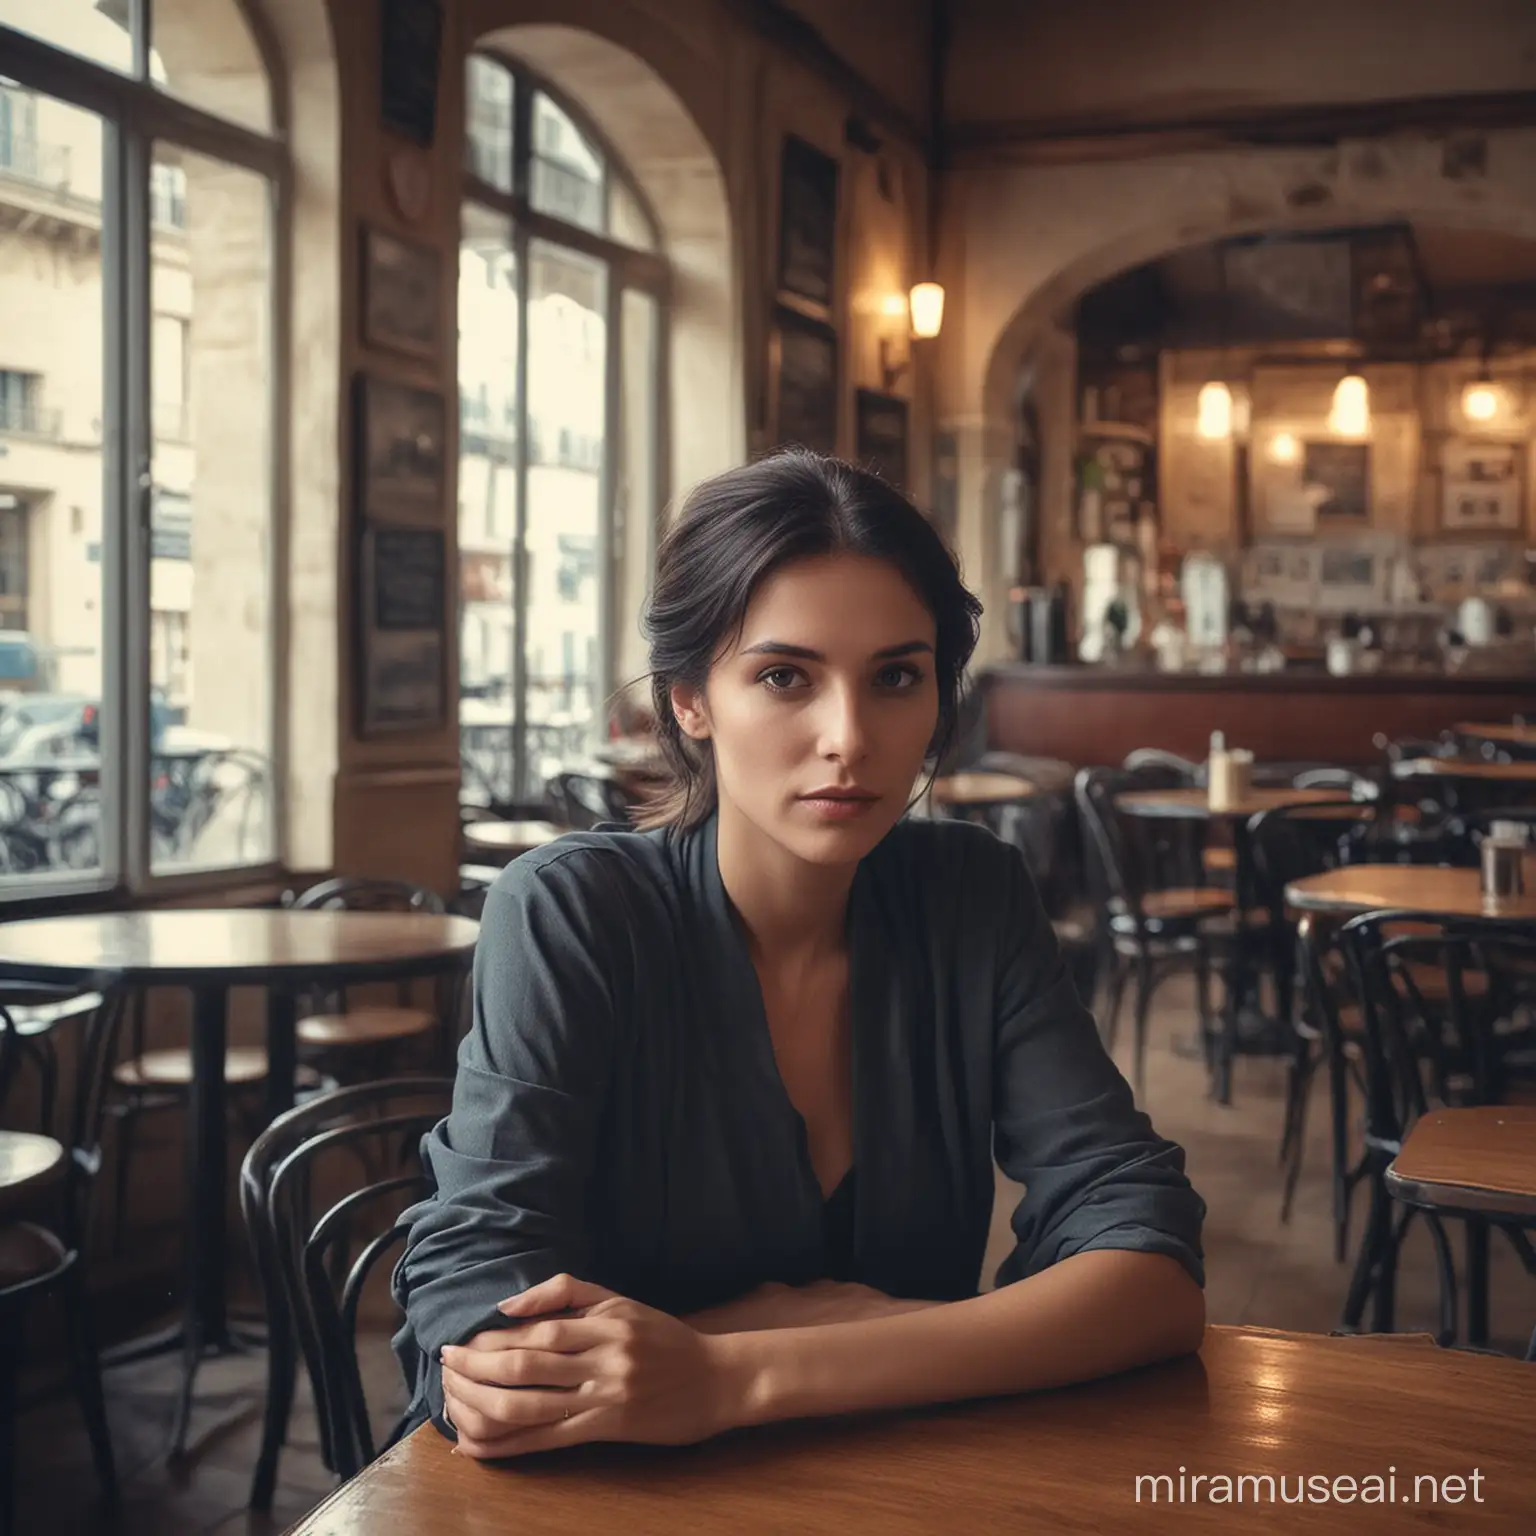 Enigmatic Woman in Parisian Caf